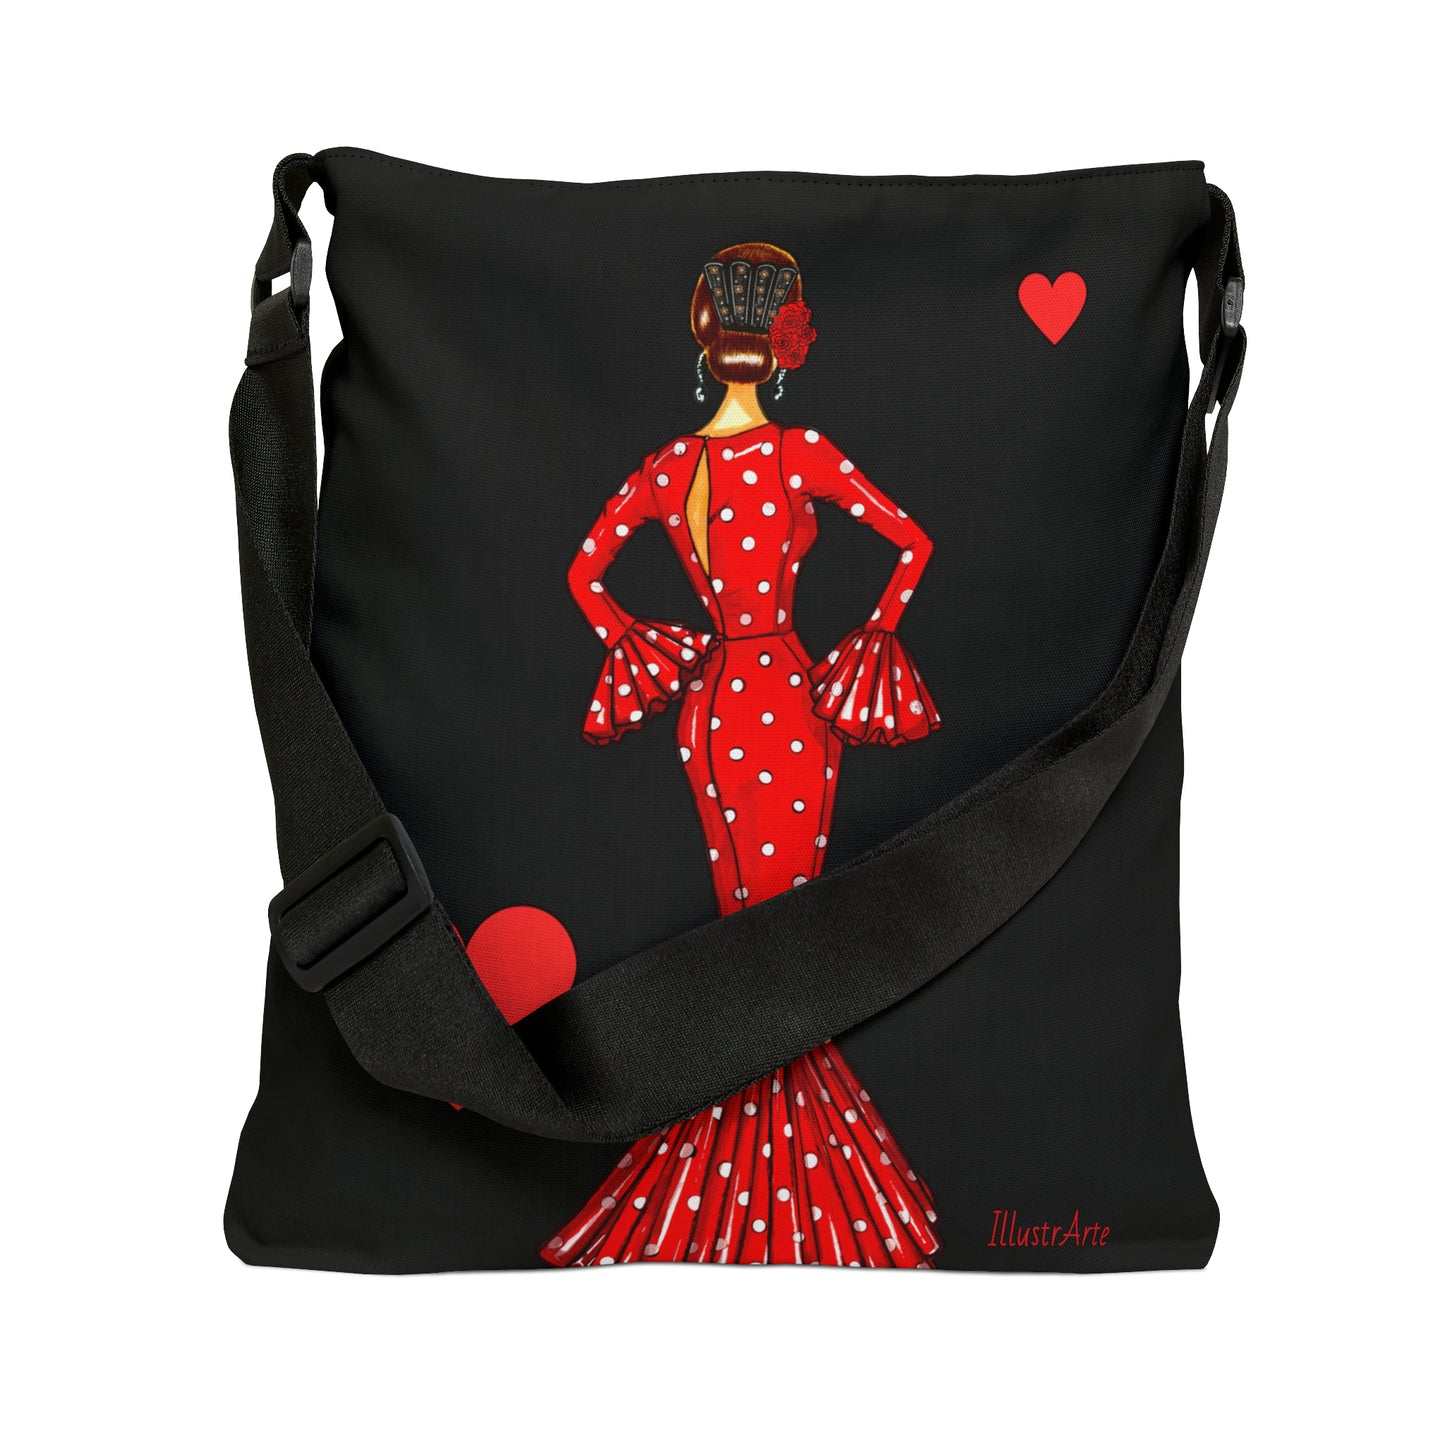 Flamenco Dancer Tote Bag with adjustable straps, red dress and black polka dots design.